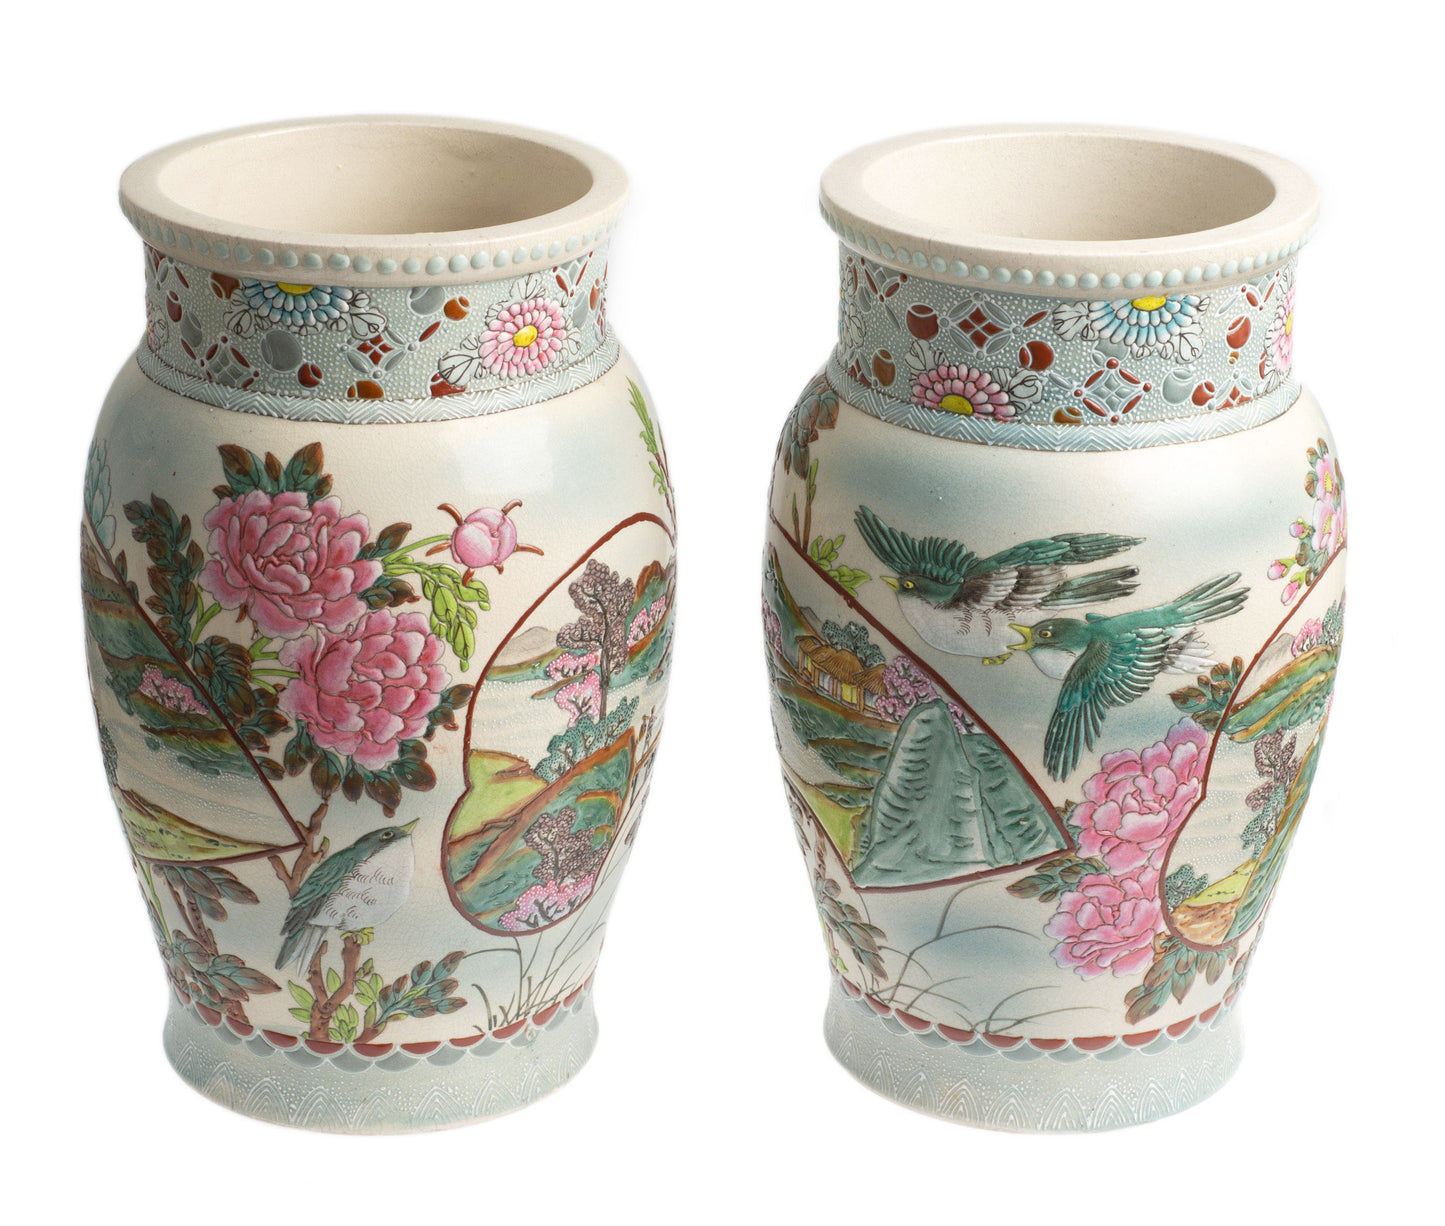 Antique Japanese Satsuma Moriage Vase Pair, Very Large Late Meiji, Prunus Blossom & Birds (Code 2685)